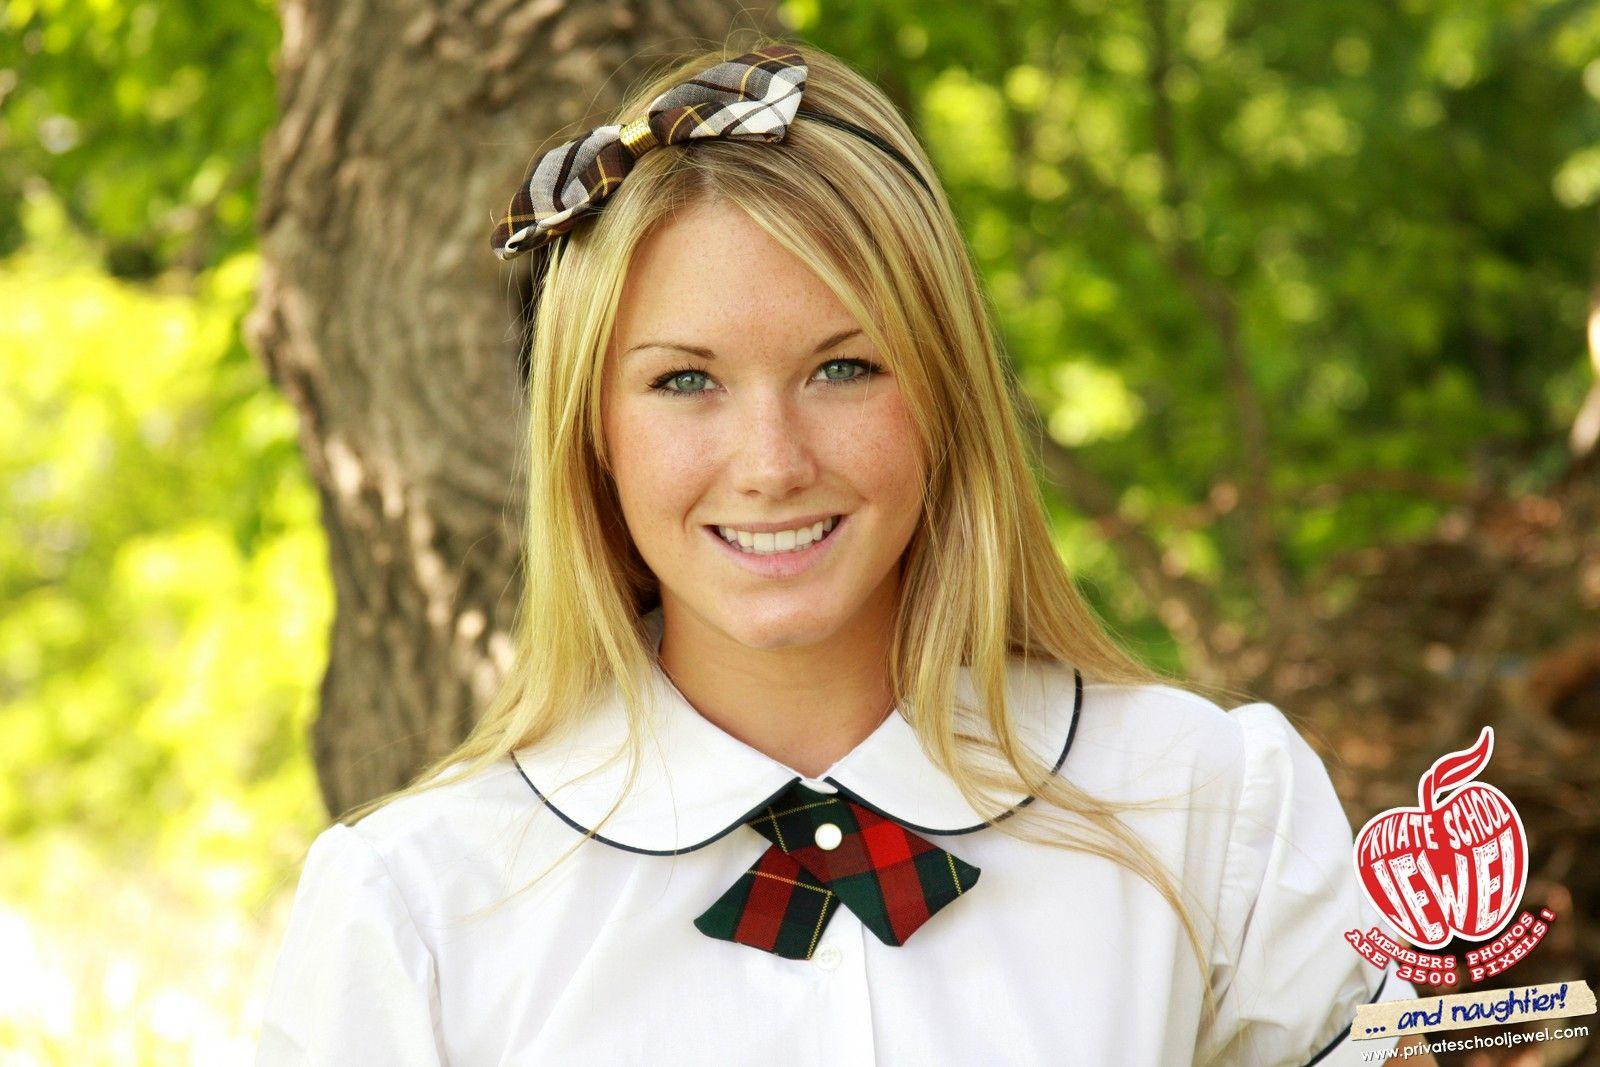 Pictures Of Teen Private School Jewel Dressed As An Adorable Schoolgirl